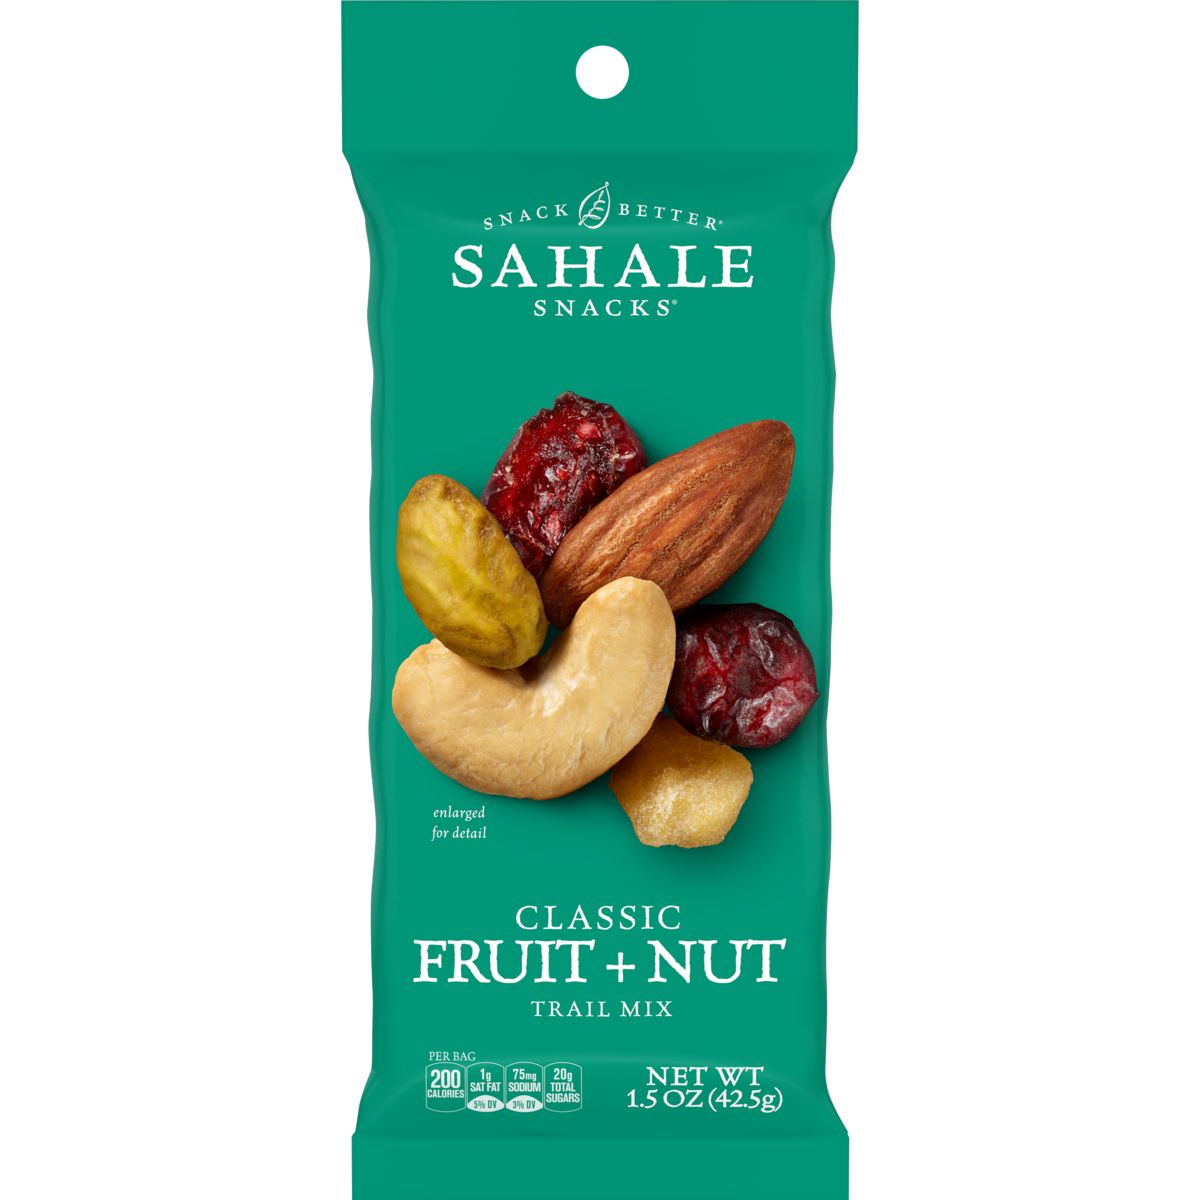 classic-fruit-nut-trail-mix-or-sahale-snacks-r